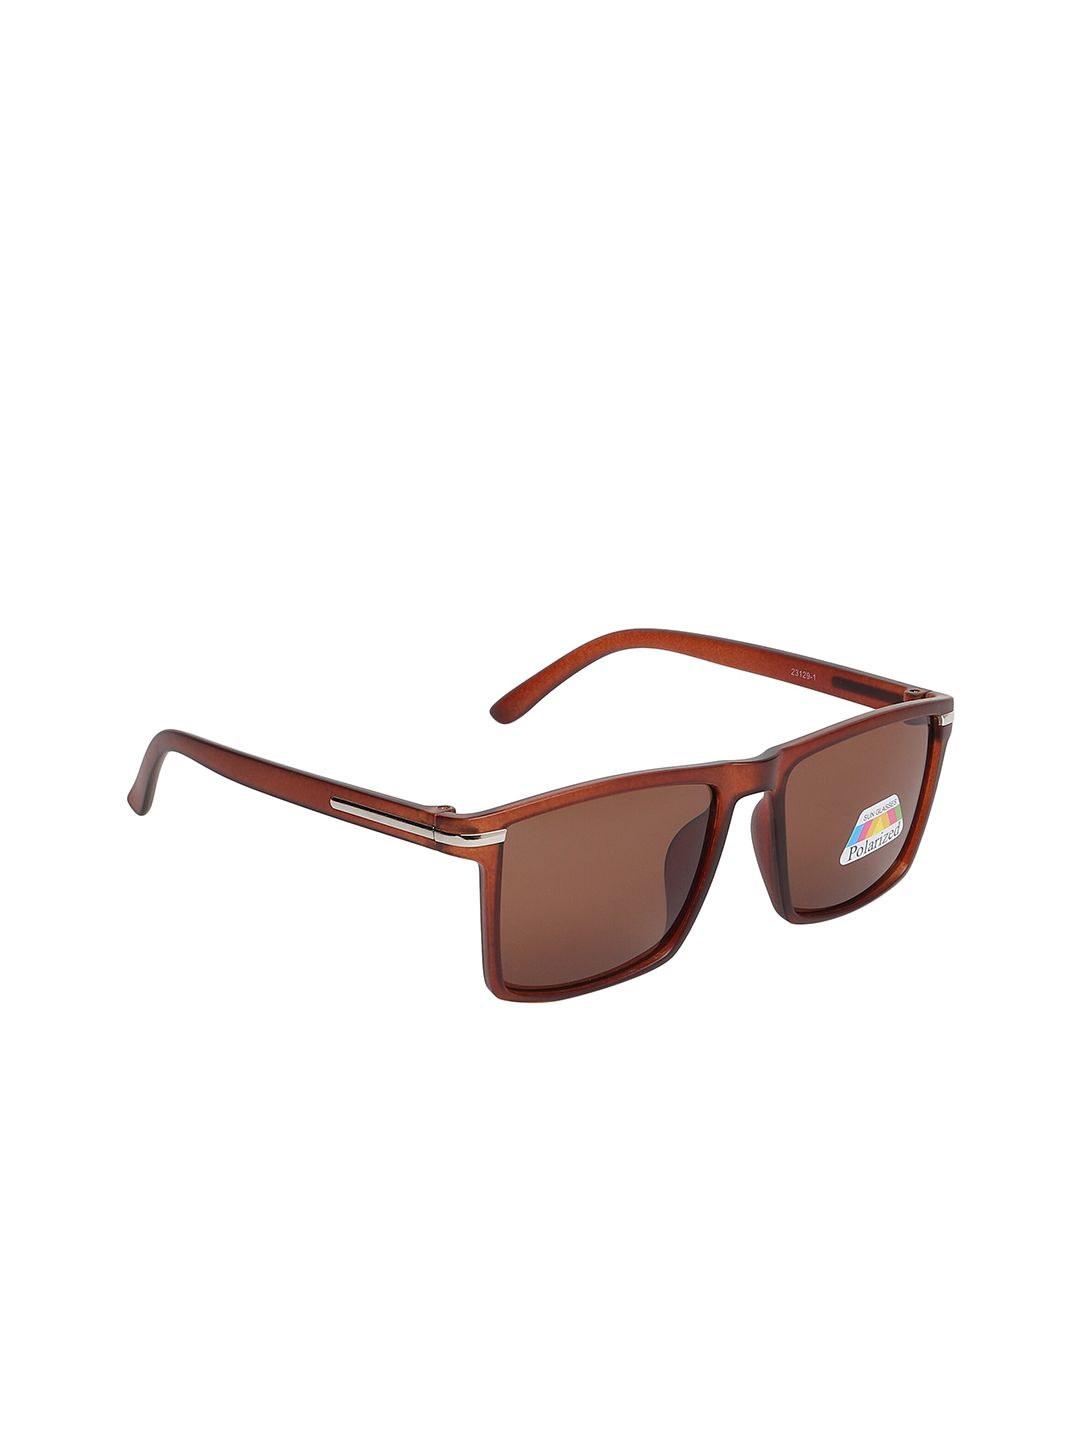 CRIBA Unisex Brown Lens & Brown Wayfarer Sunglasses UV Protected Lens CR_SIL-FRAME_BRN Price in India